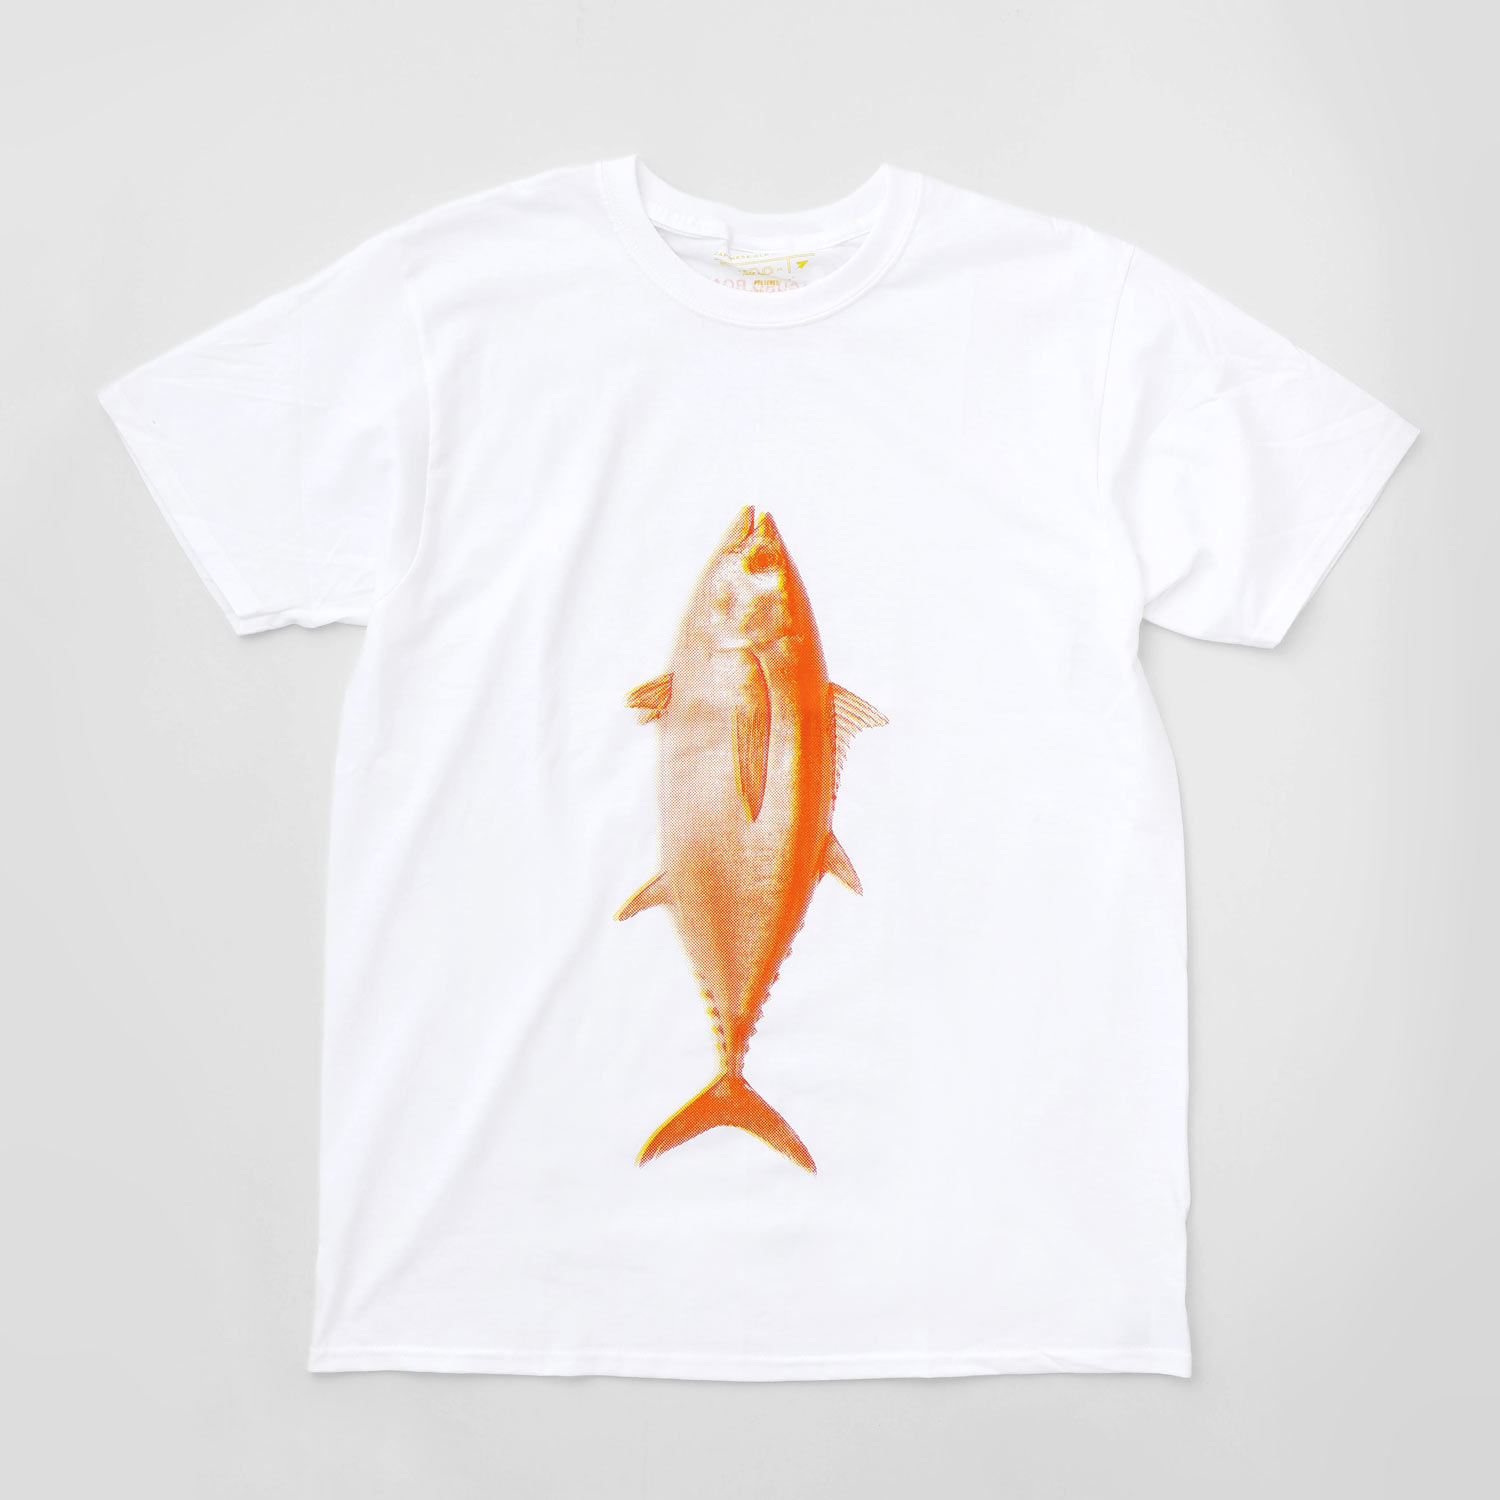 PAPERSKY MAGURO T ペーパースカイ マグロTシャツ メンズ レディース 半袖 魚 鮪 おしゃれ かわいい カジュアル 綿100% 白 KAIDO T